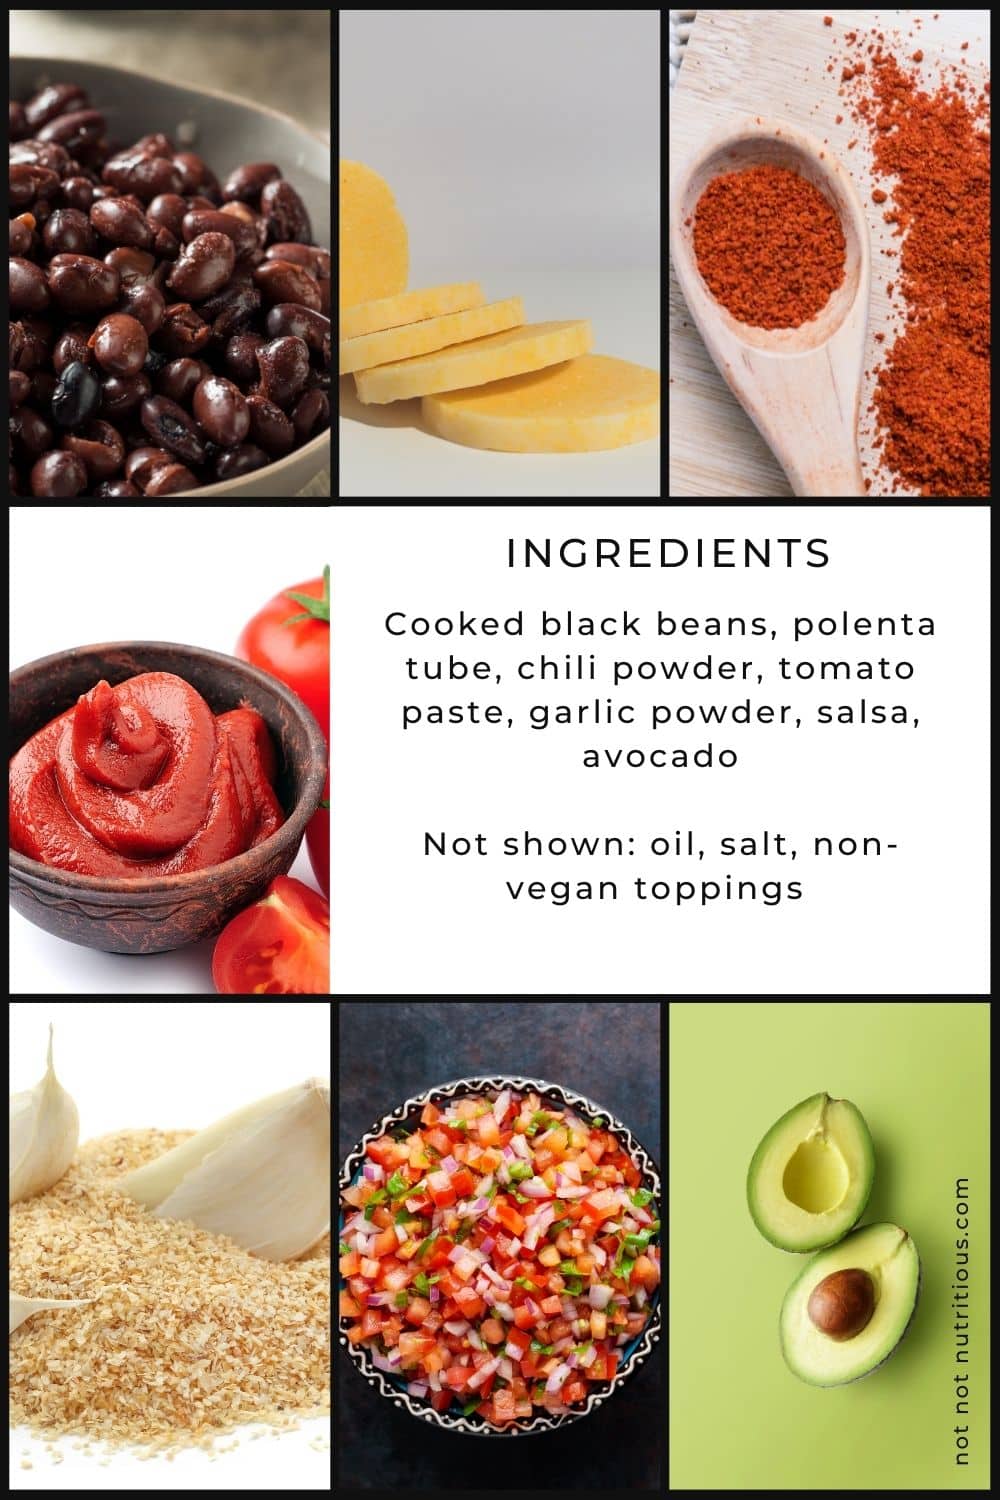 Ingredients for Black Beans and Polenta: cooked black beans, polenta roll, chilli powder, tomato paste, garlic powder, salsa, and avocado. 